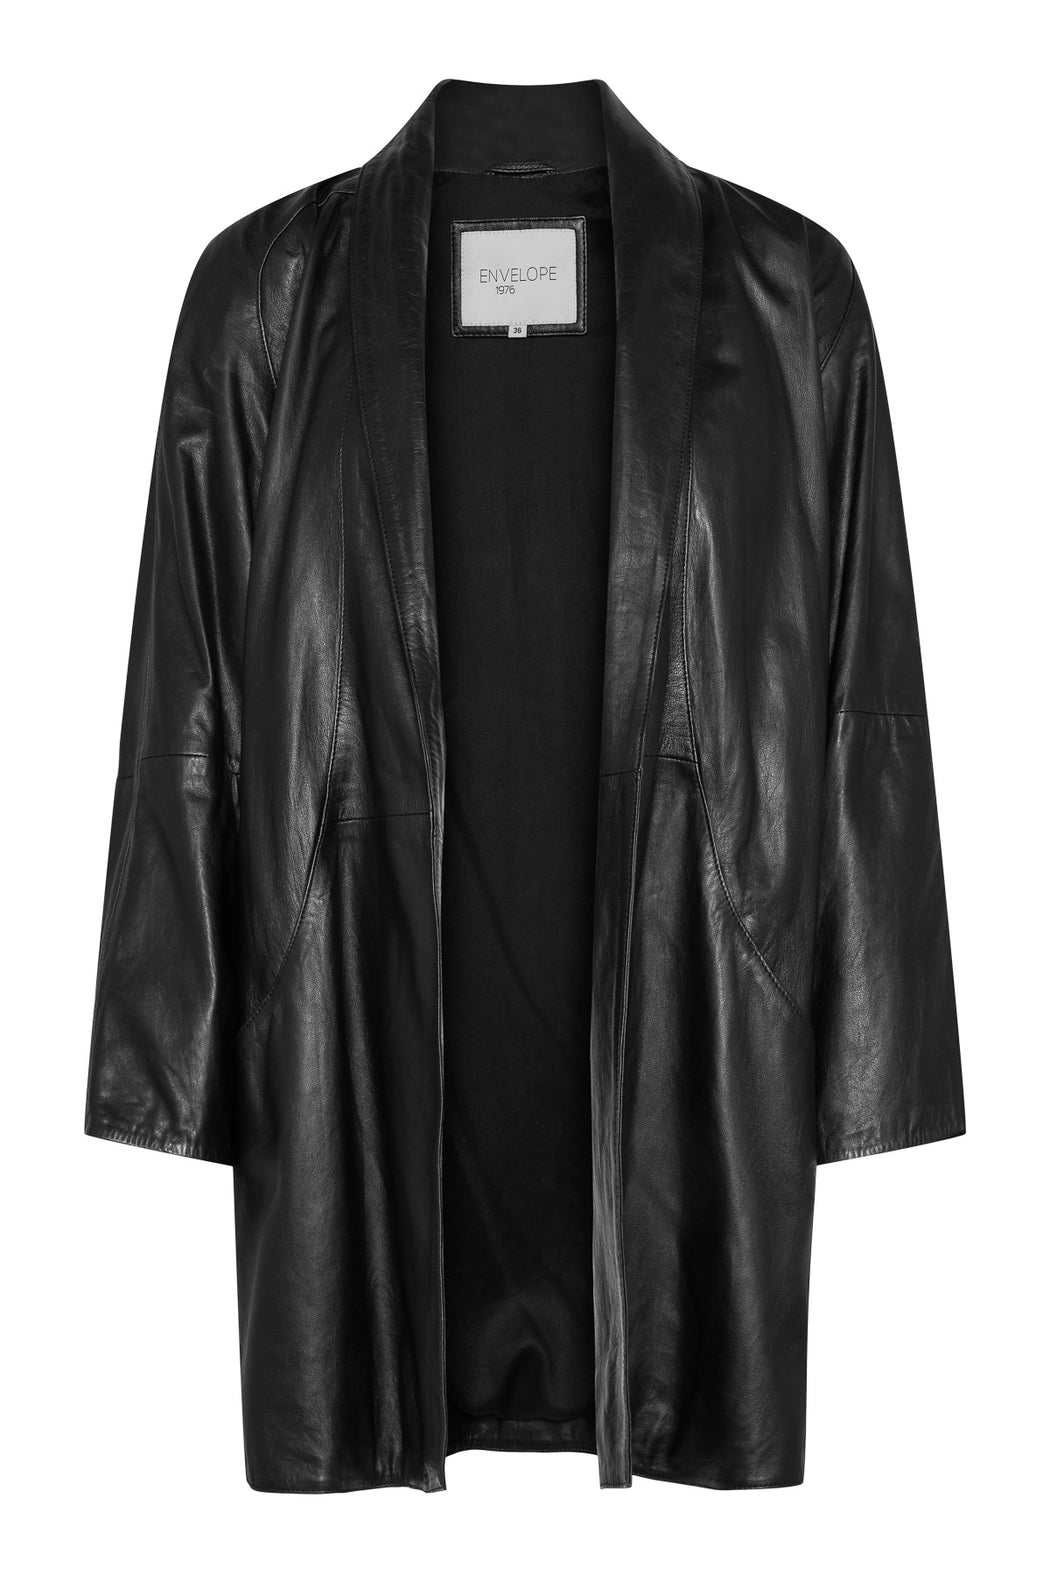 Envelope1976 Kelly coat, Black Coat Black